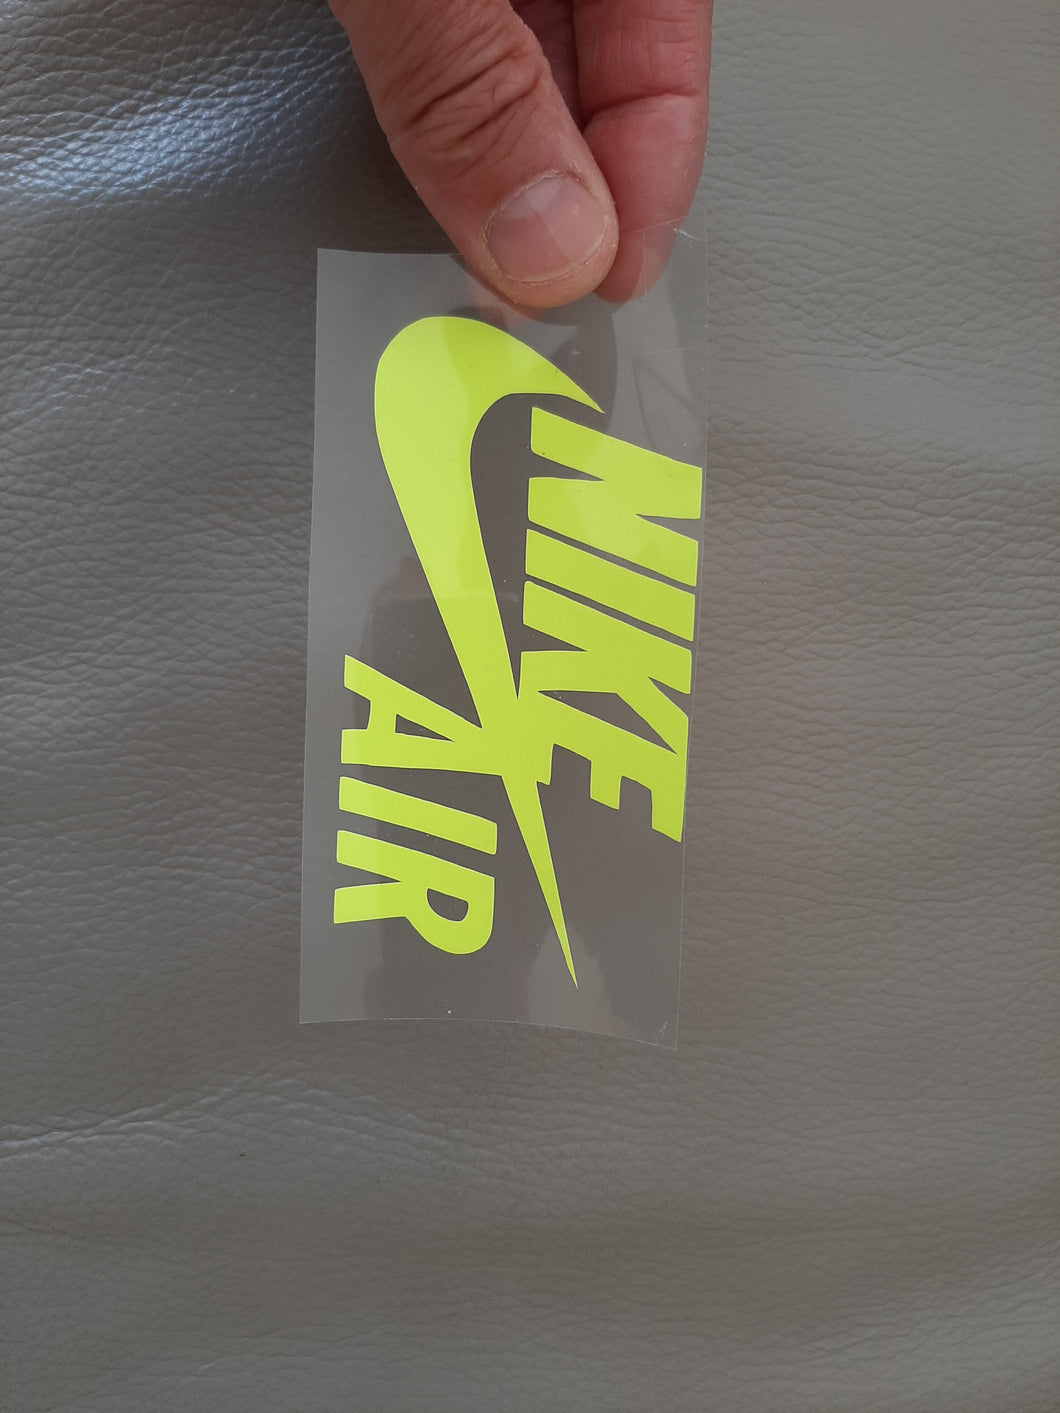 Nike Air Logo Iron-on Sticker (heat transfer)